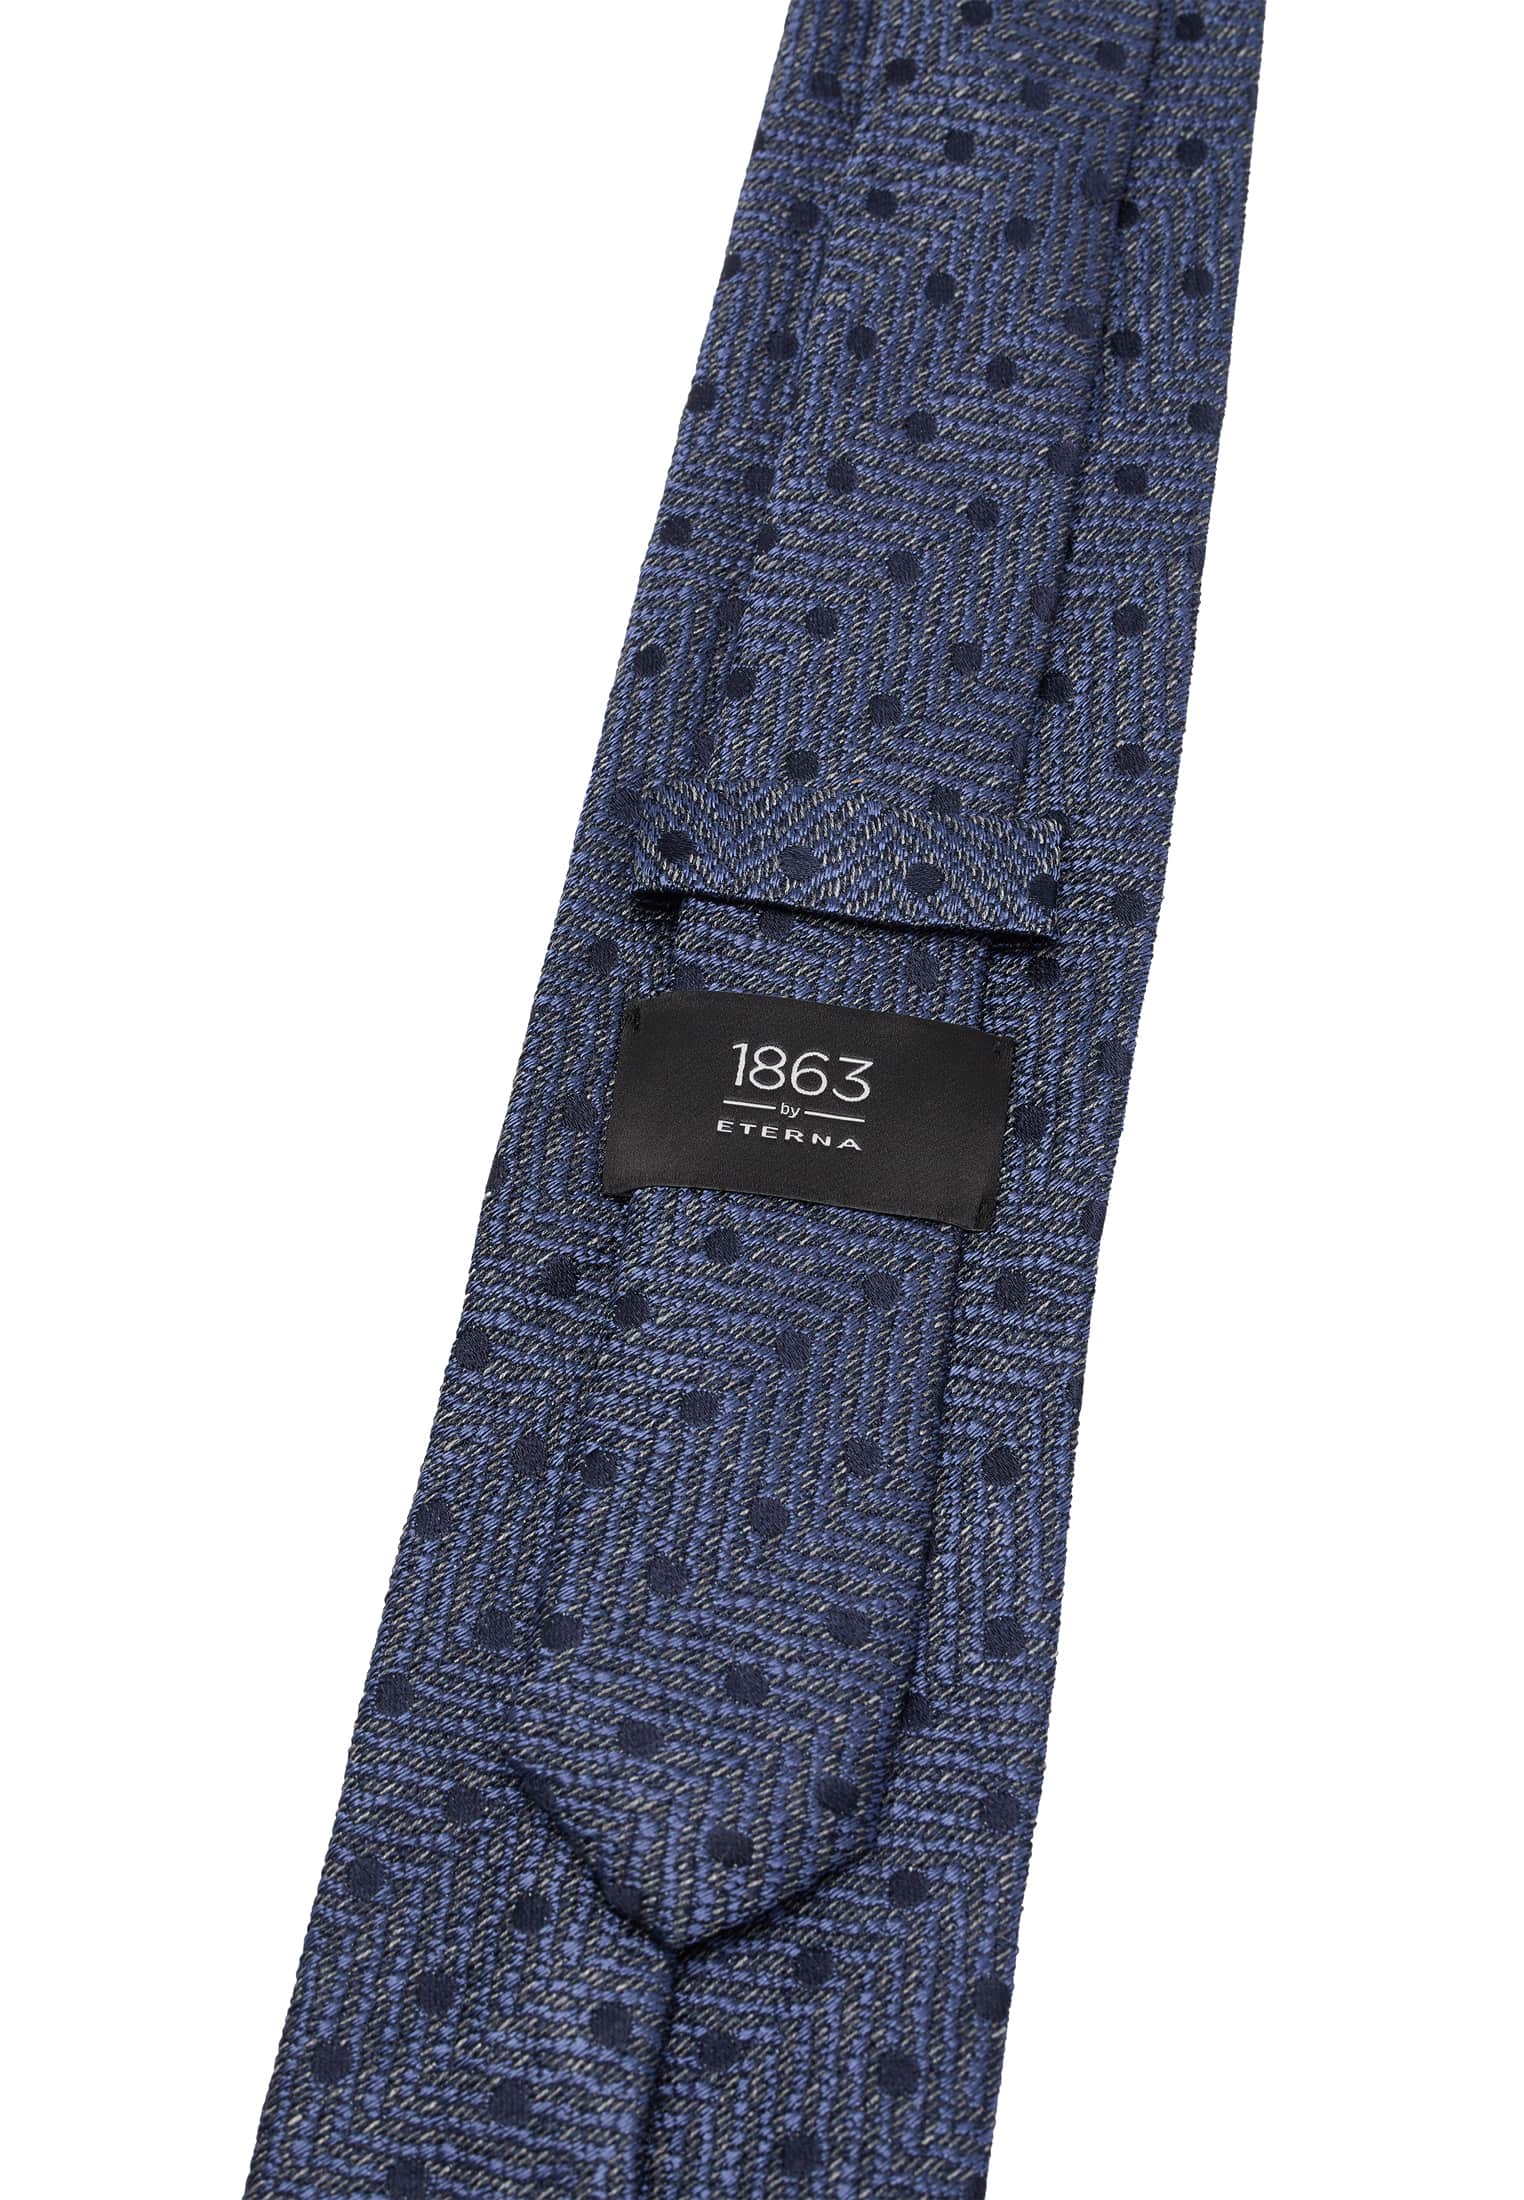 Krawatte in dunkelblau strukturiert | dunkelblau | 142 | 1AC01933-01-81-142 | Breite Krawatten